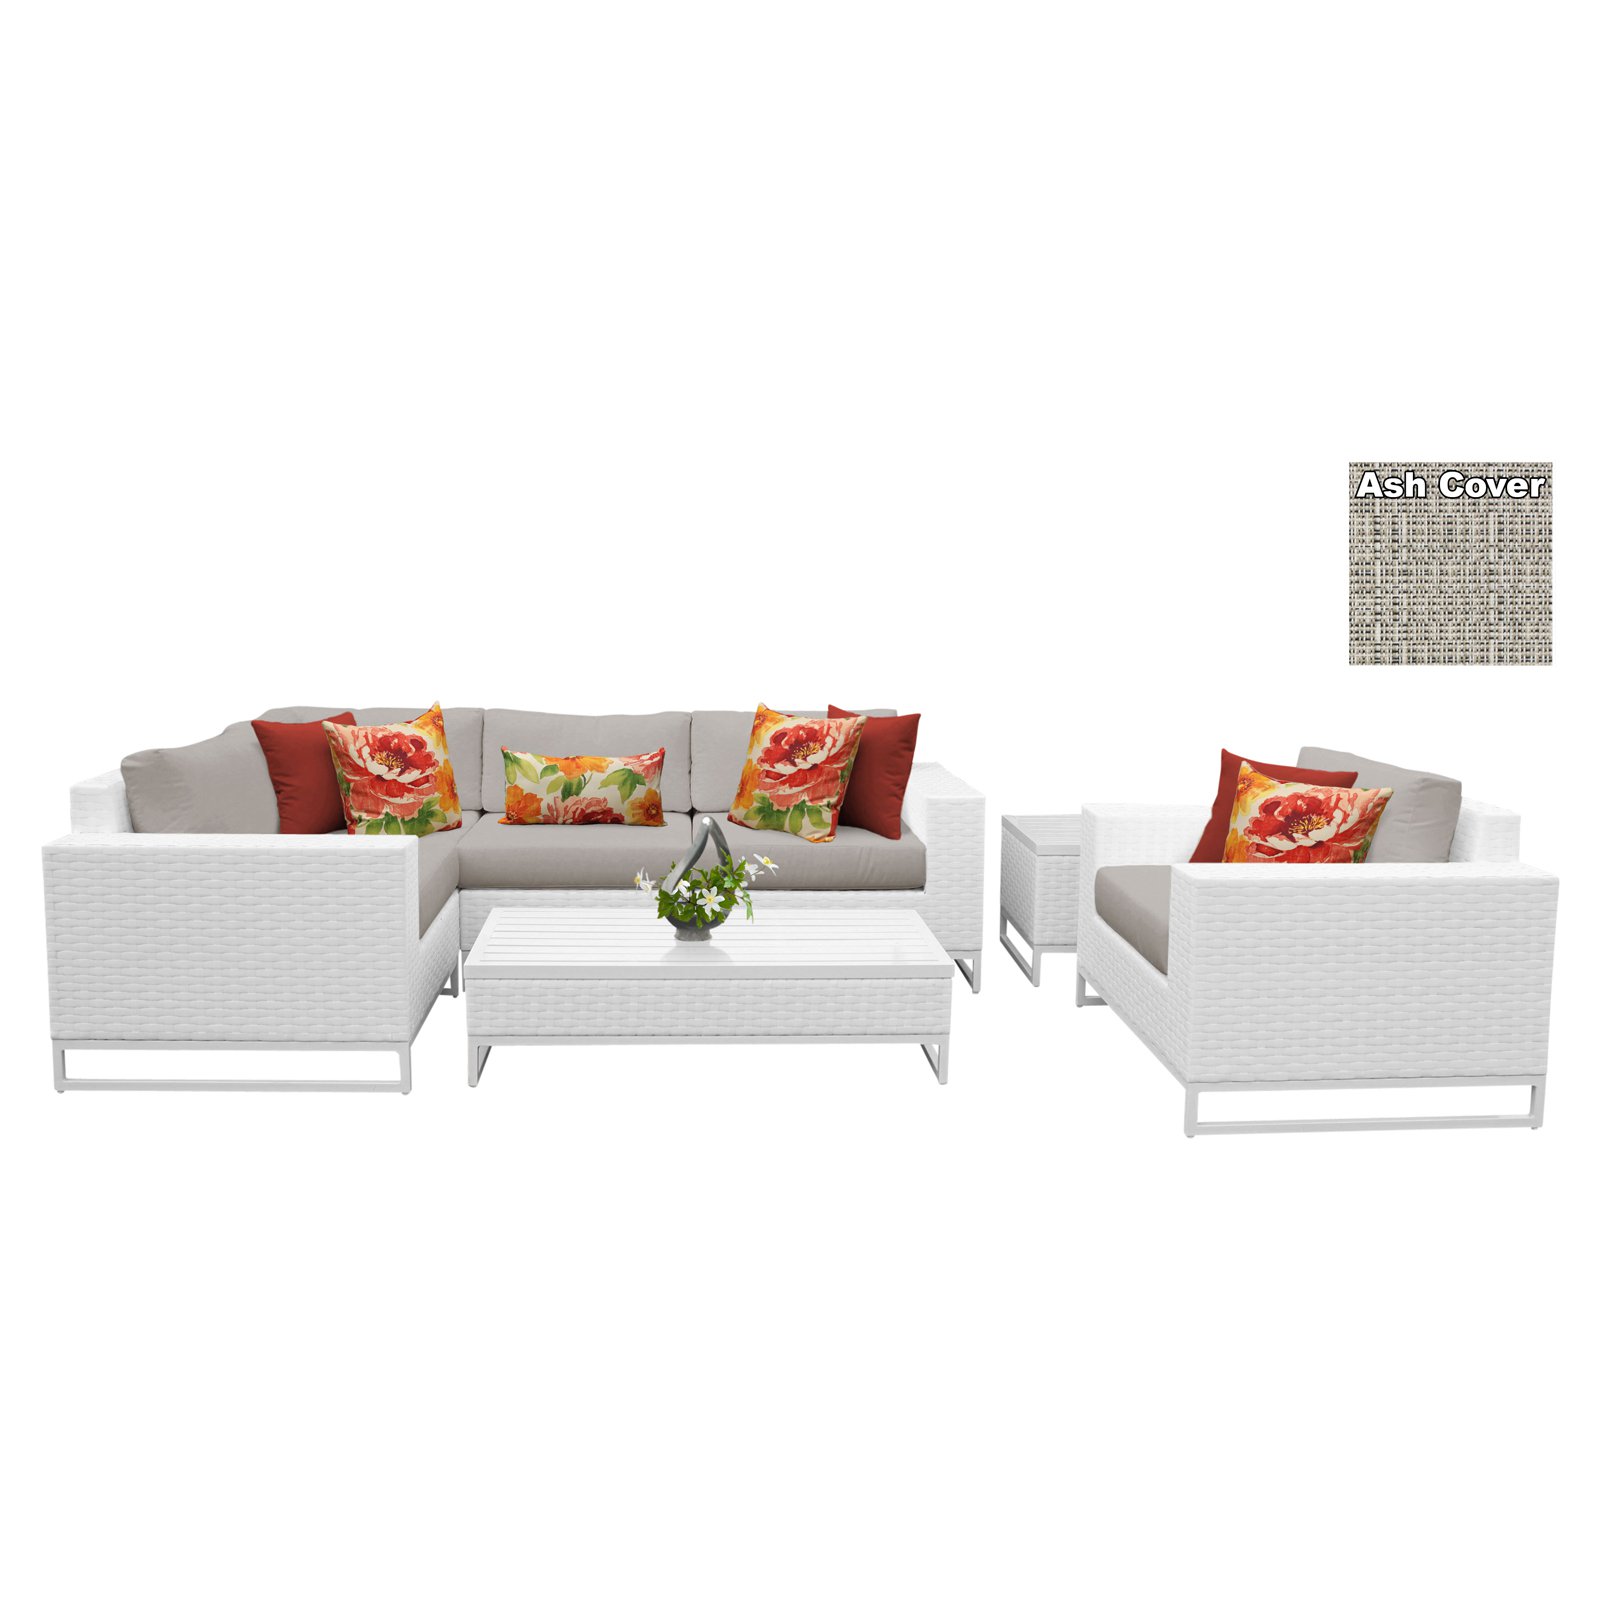 TK Classics Miami Wicker 7 Piece Corner Sofa Patio Conversation Set with Club Chair - image 1 of 3